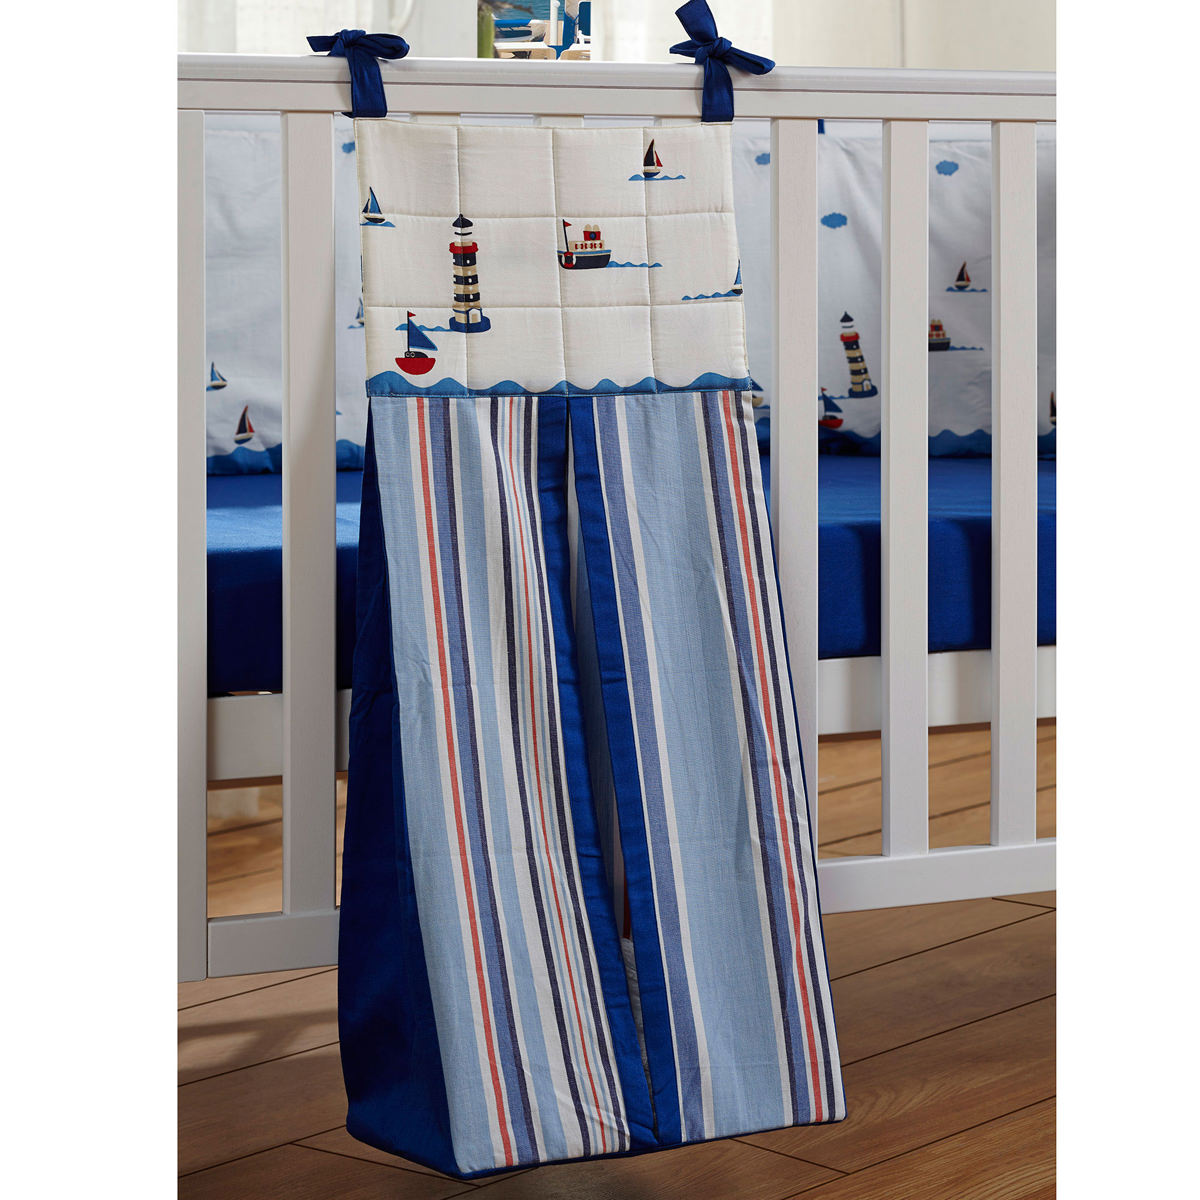 Sailor Stripe Blue Diaper Stacker Bag